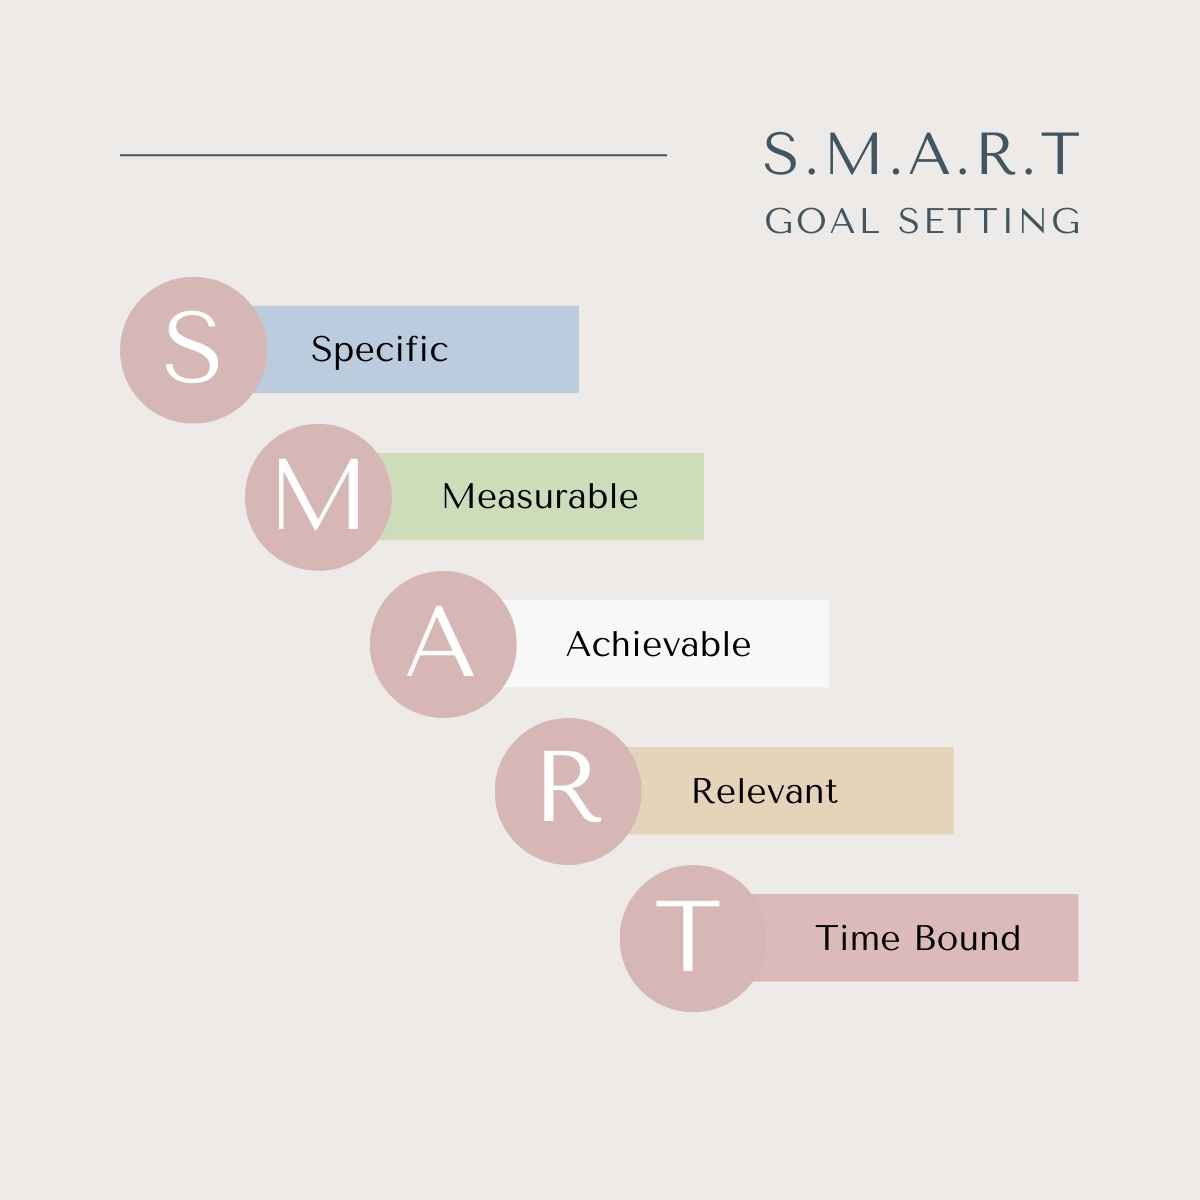 SMART goal setting